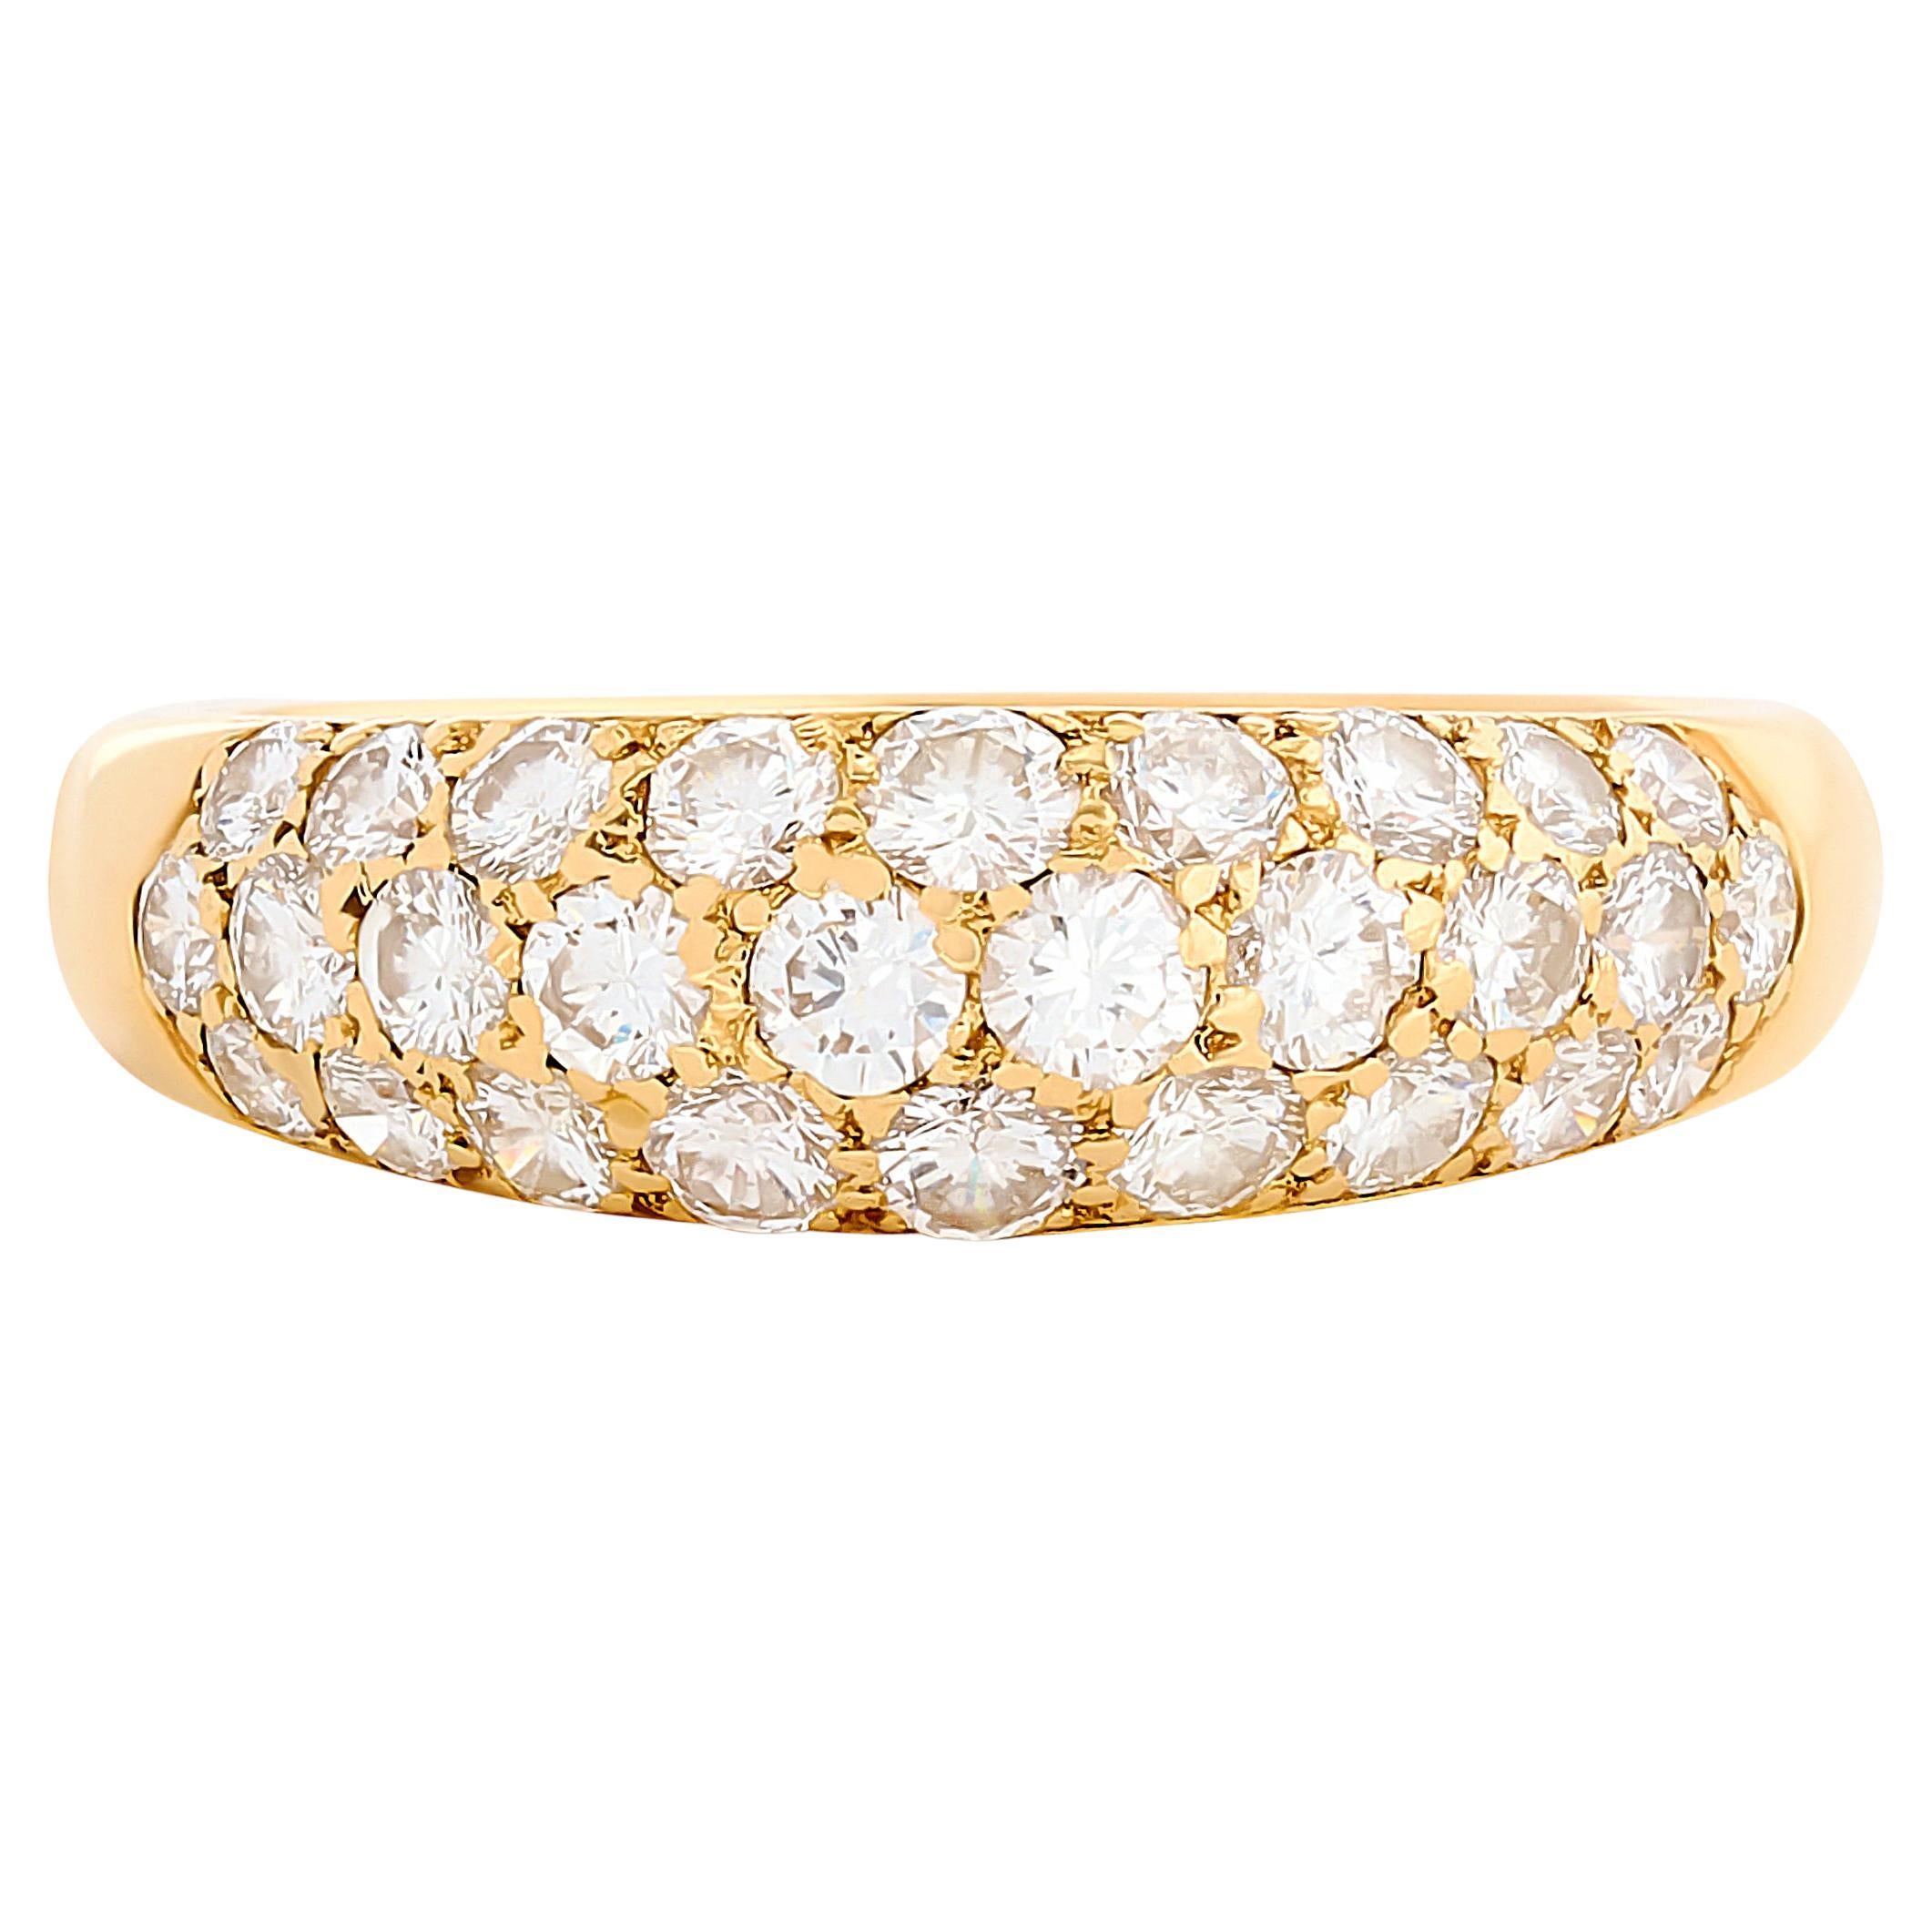 Oscar Heyman 18 Karat Yellow Gold Diamond Dome Ring For Sale